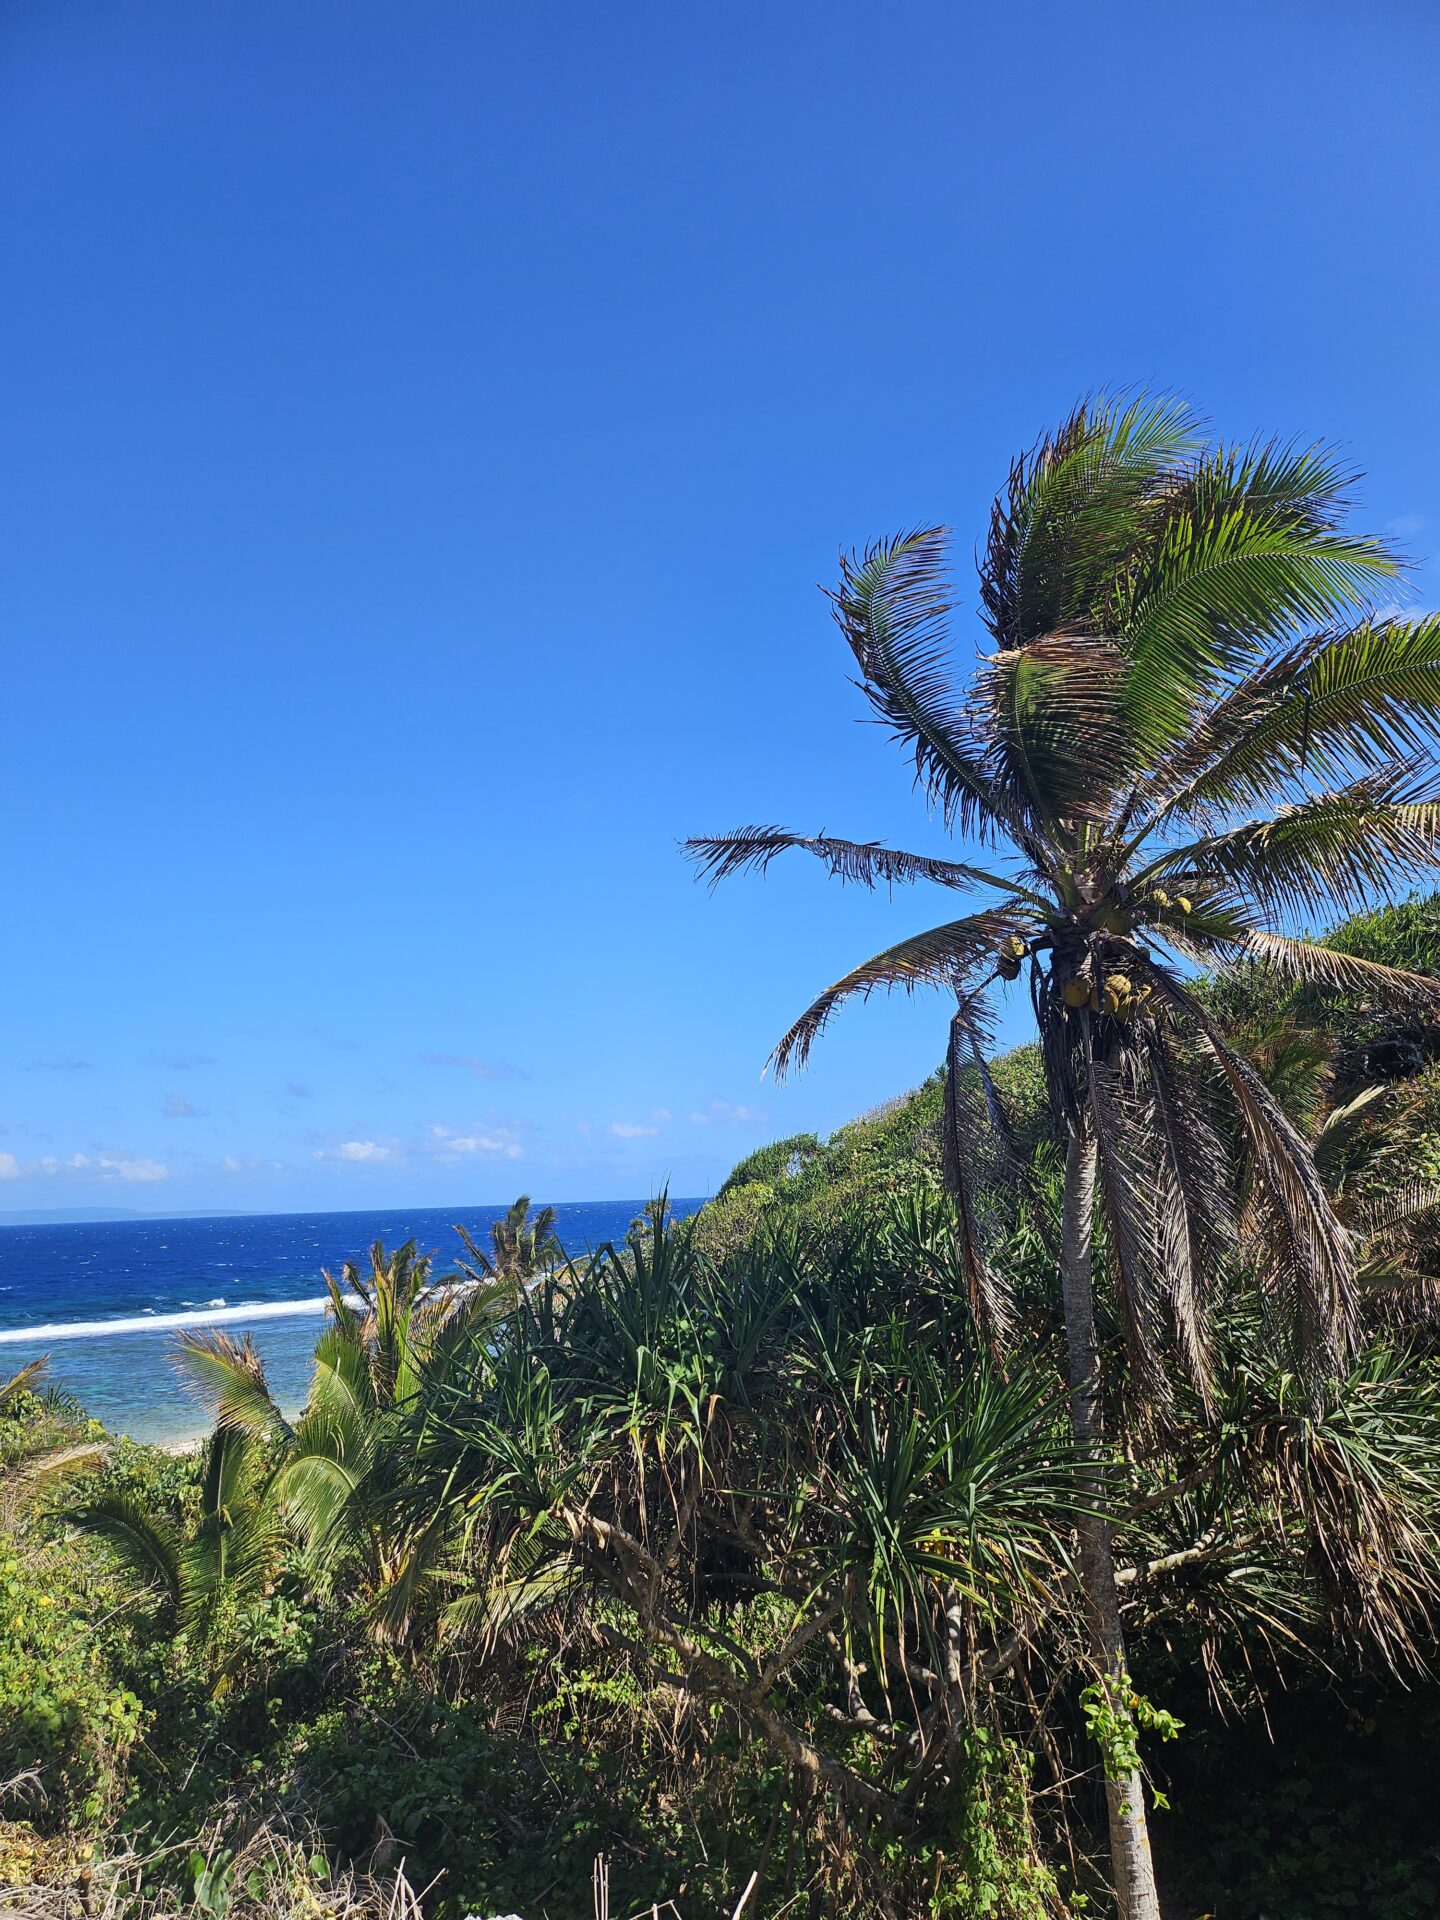 a palm trees and a beach